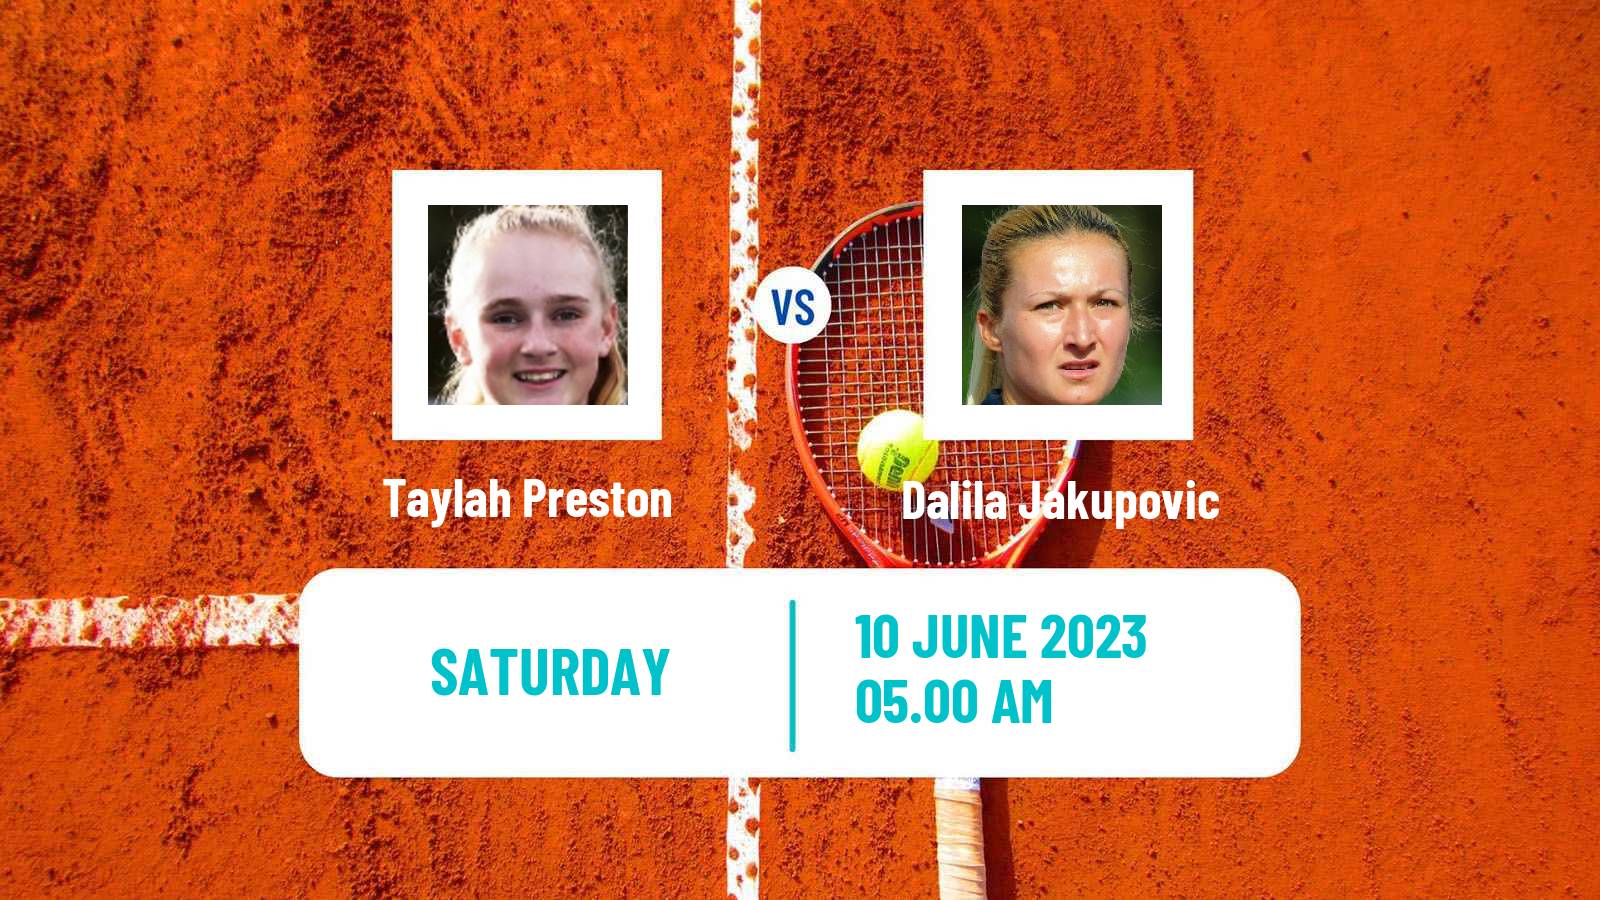 Tennis WTA Hertogenbosch Taylah Preston - Dalila Jakupovic